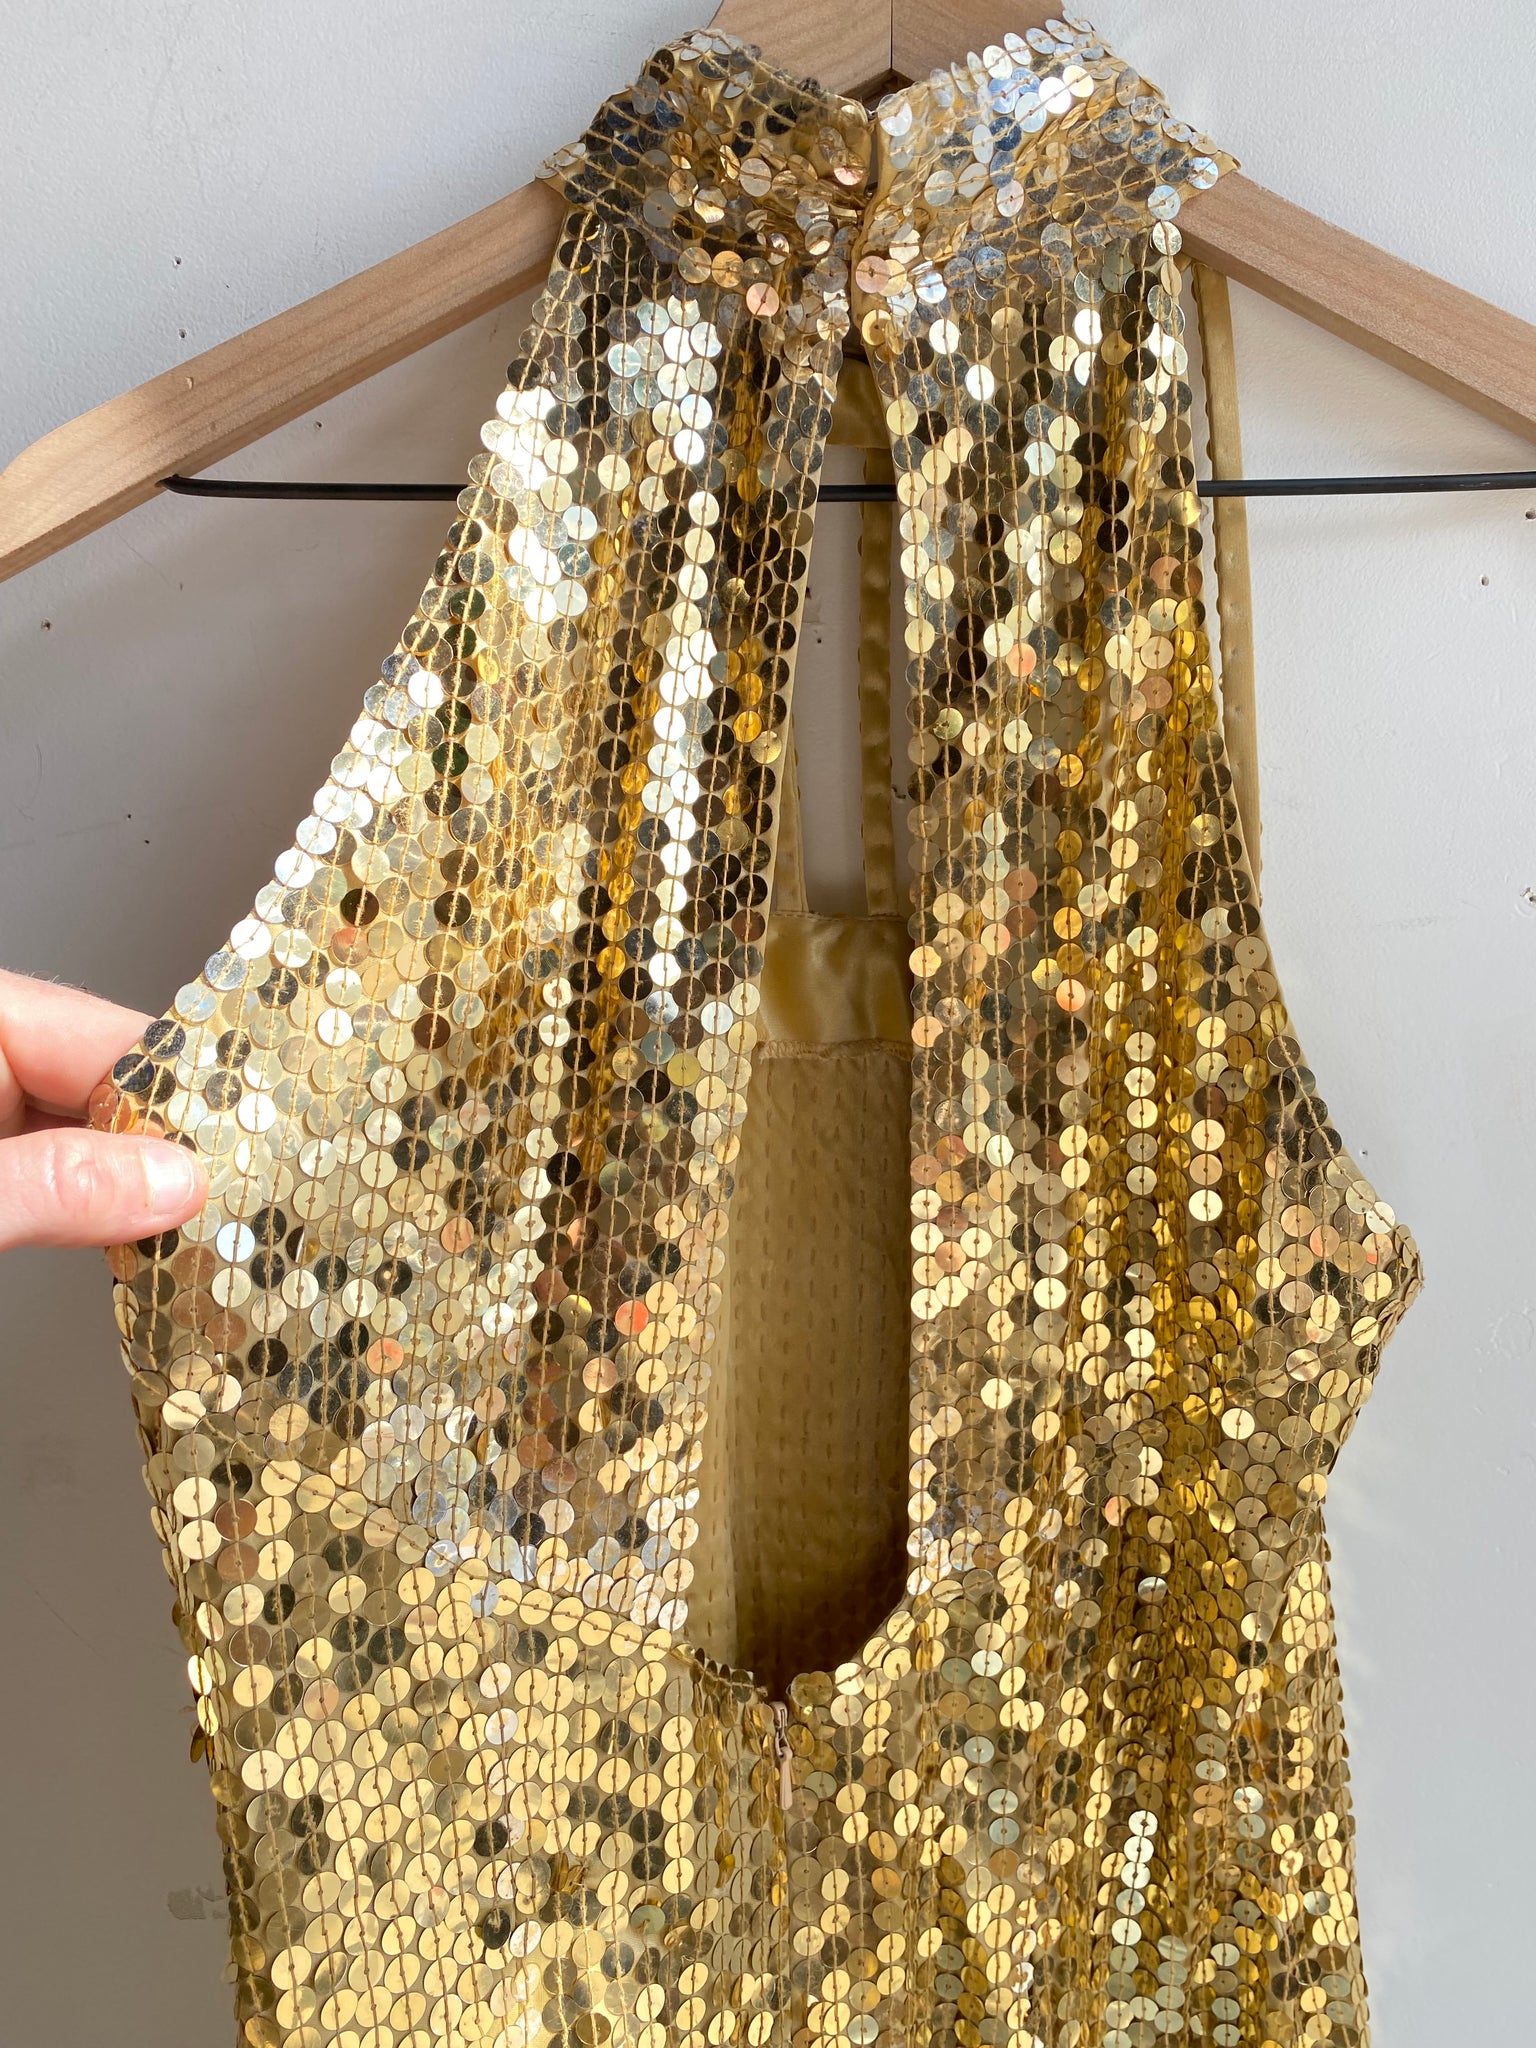 90s Gold Sequin Dress